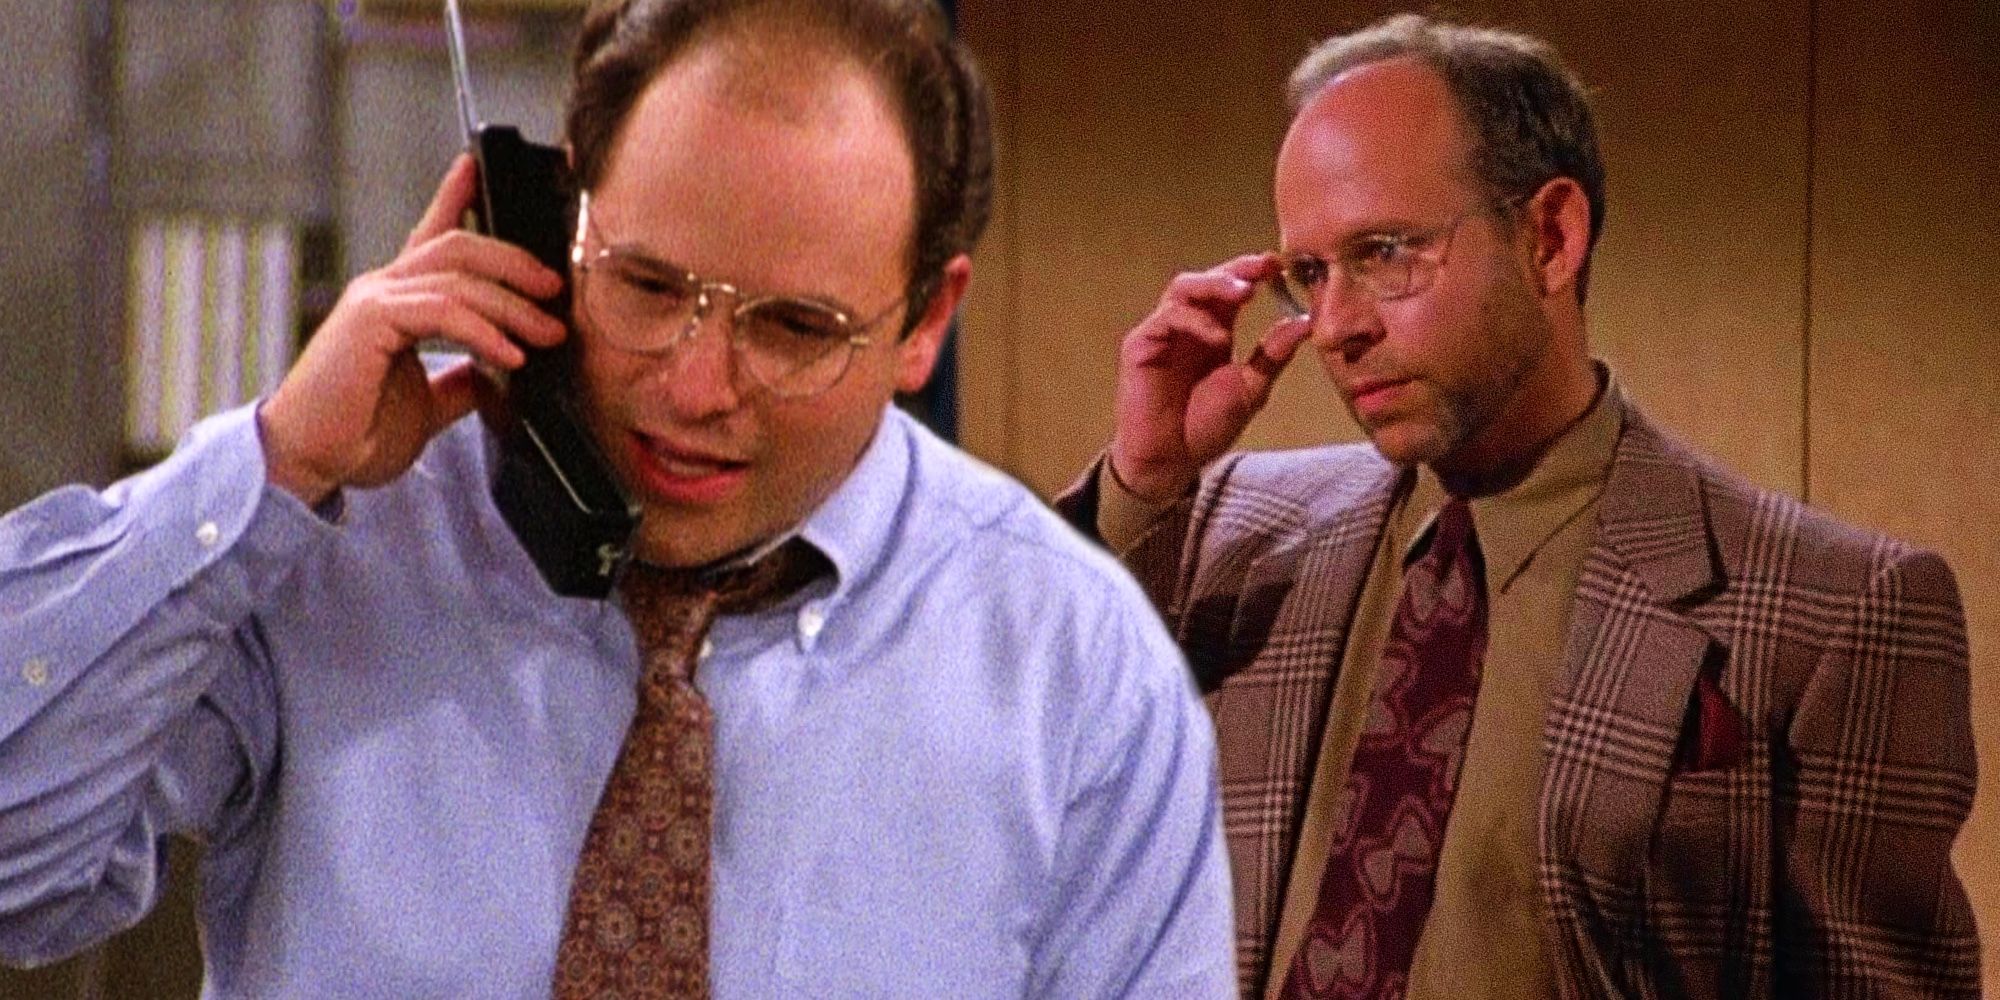 Seinfeld: why jason alexander originally disliked season 4's jerry storyline george costanza